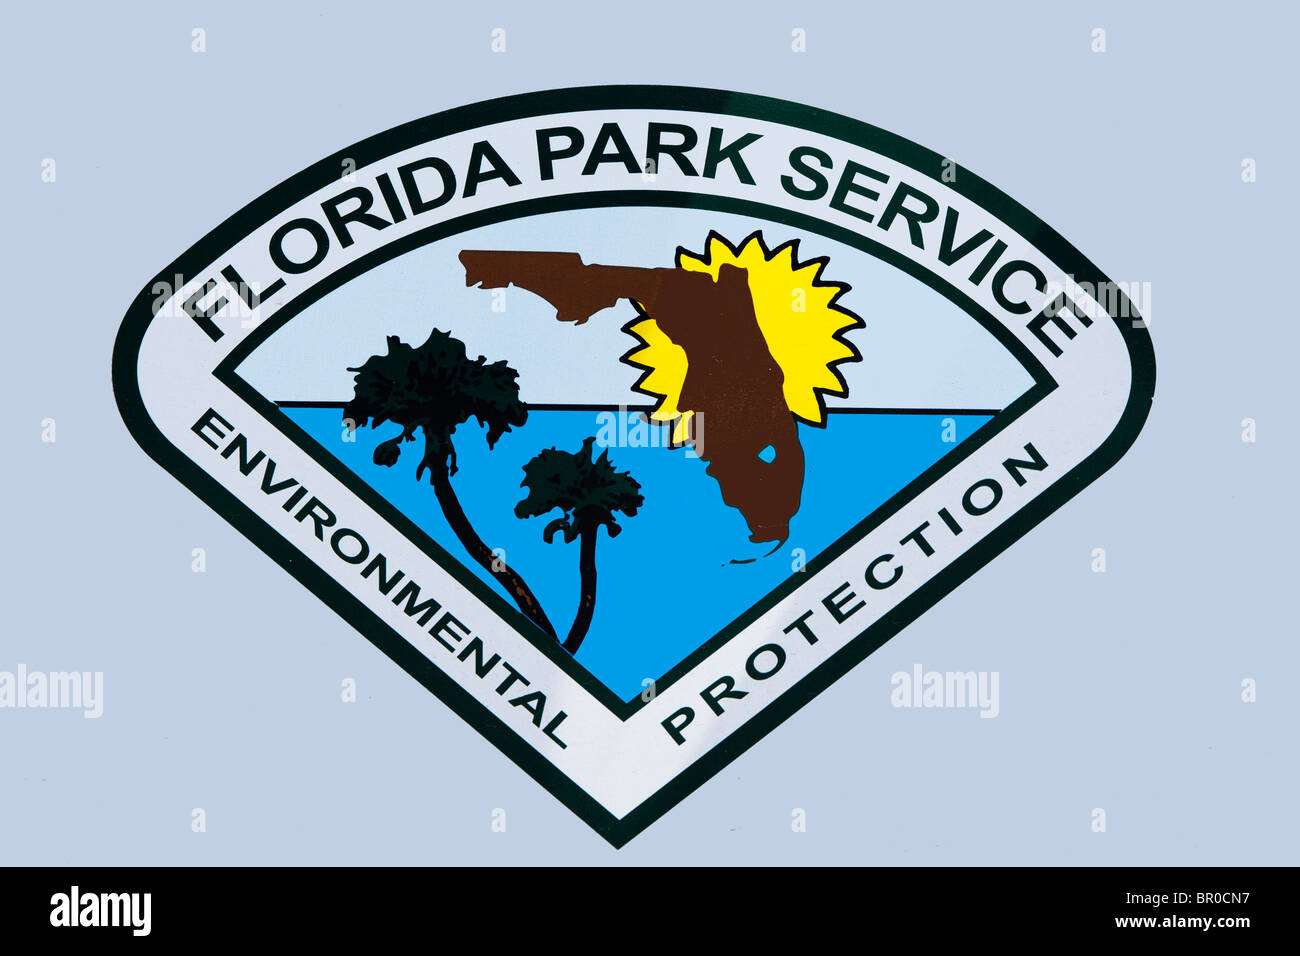 Florida Park service logo Stock Photo